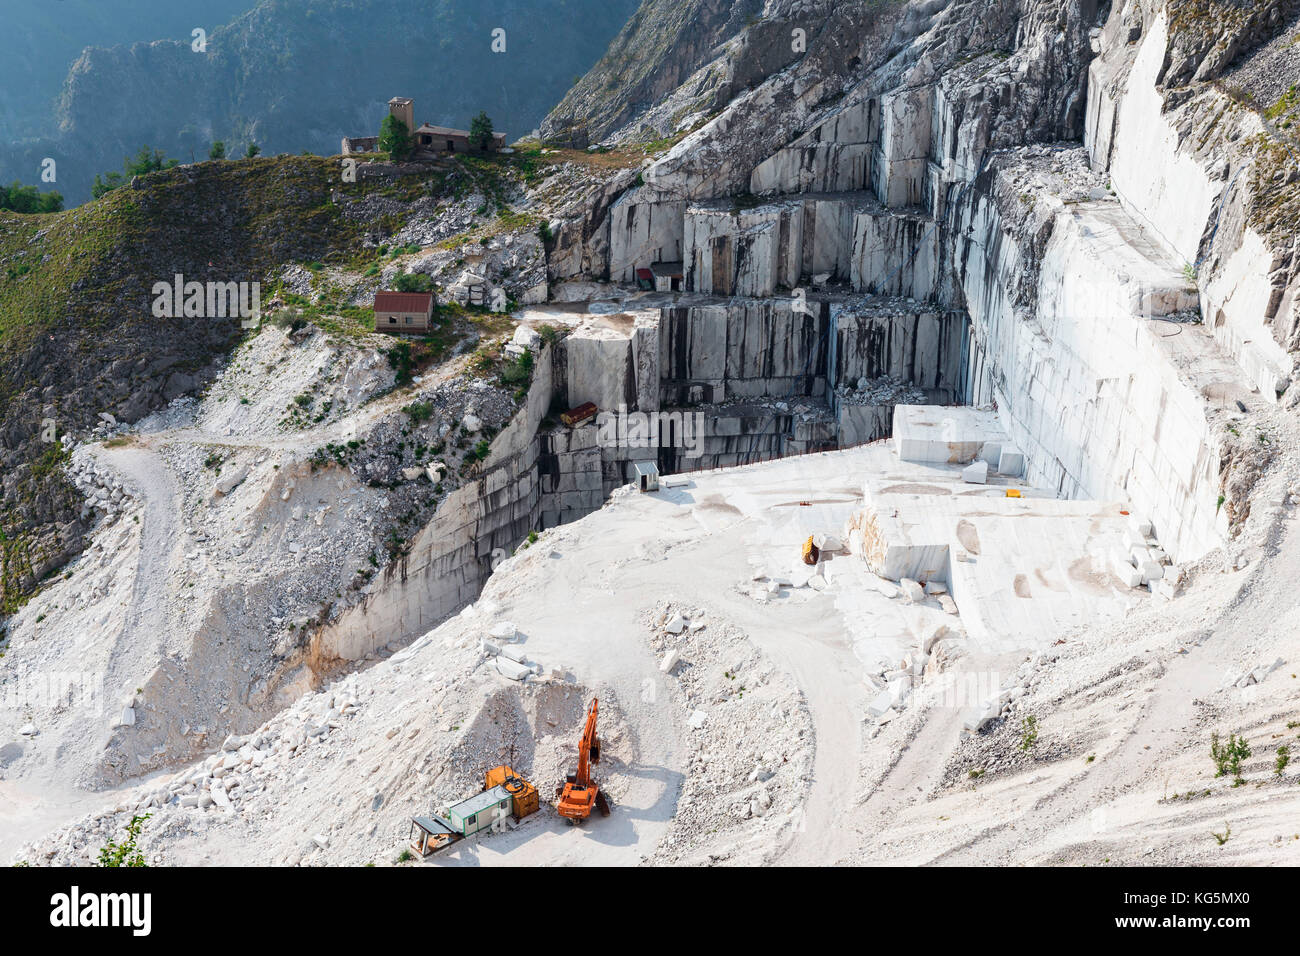 Passo del vestito, Alpes Apuanes, Massa Carrara, toscane, italie Banque D'Images